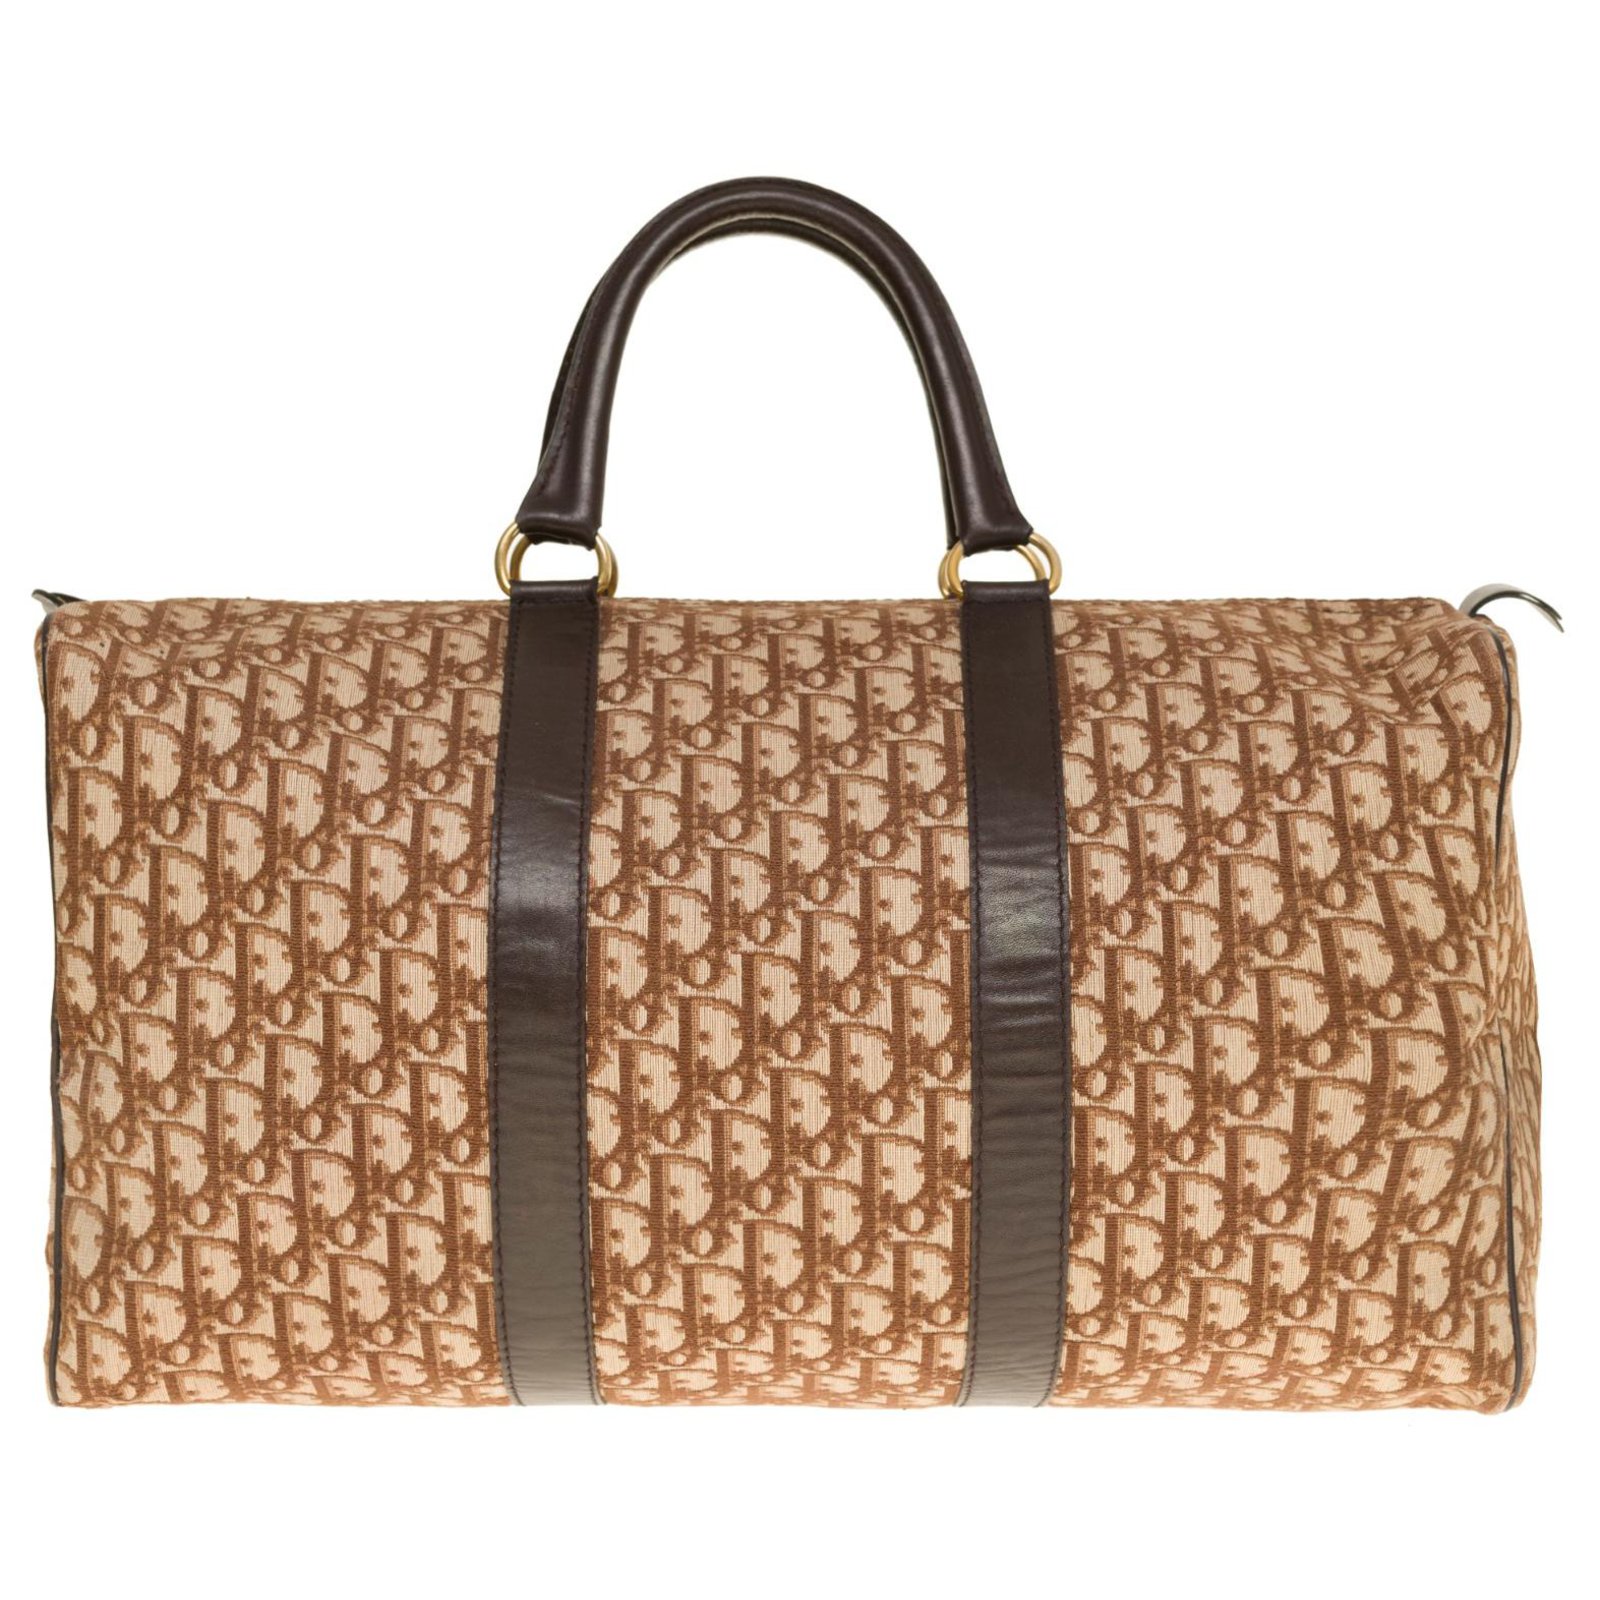 Dior Travel Bag 